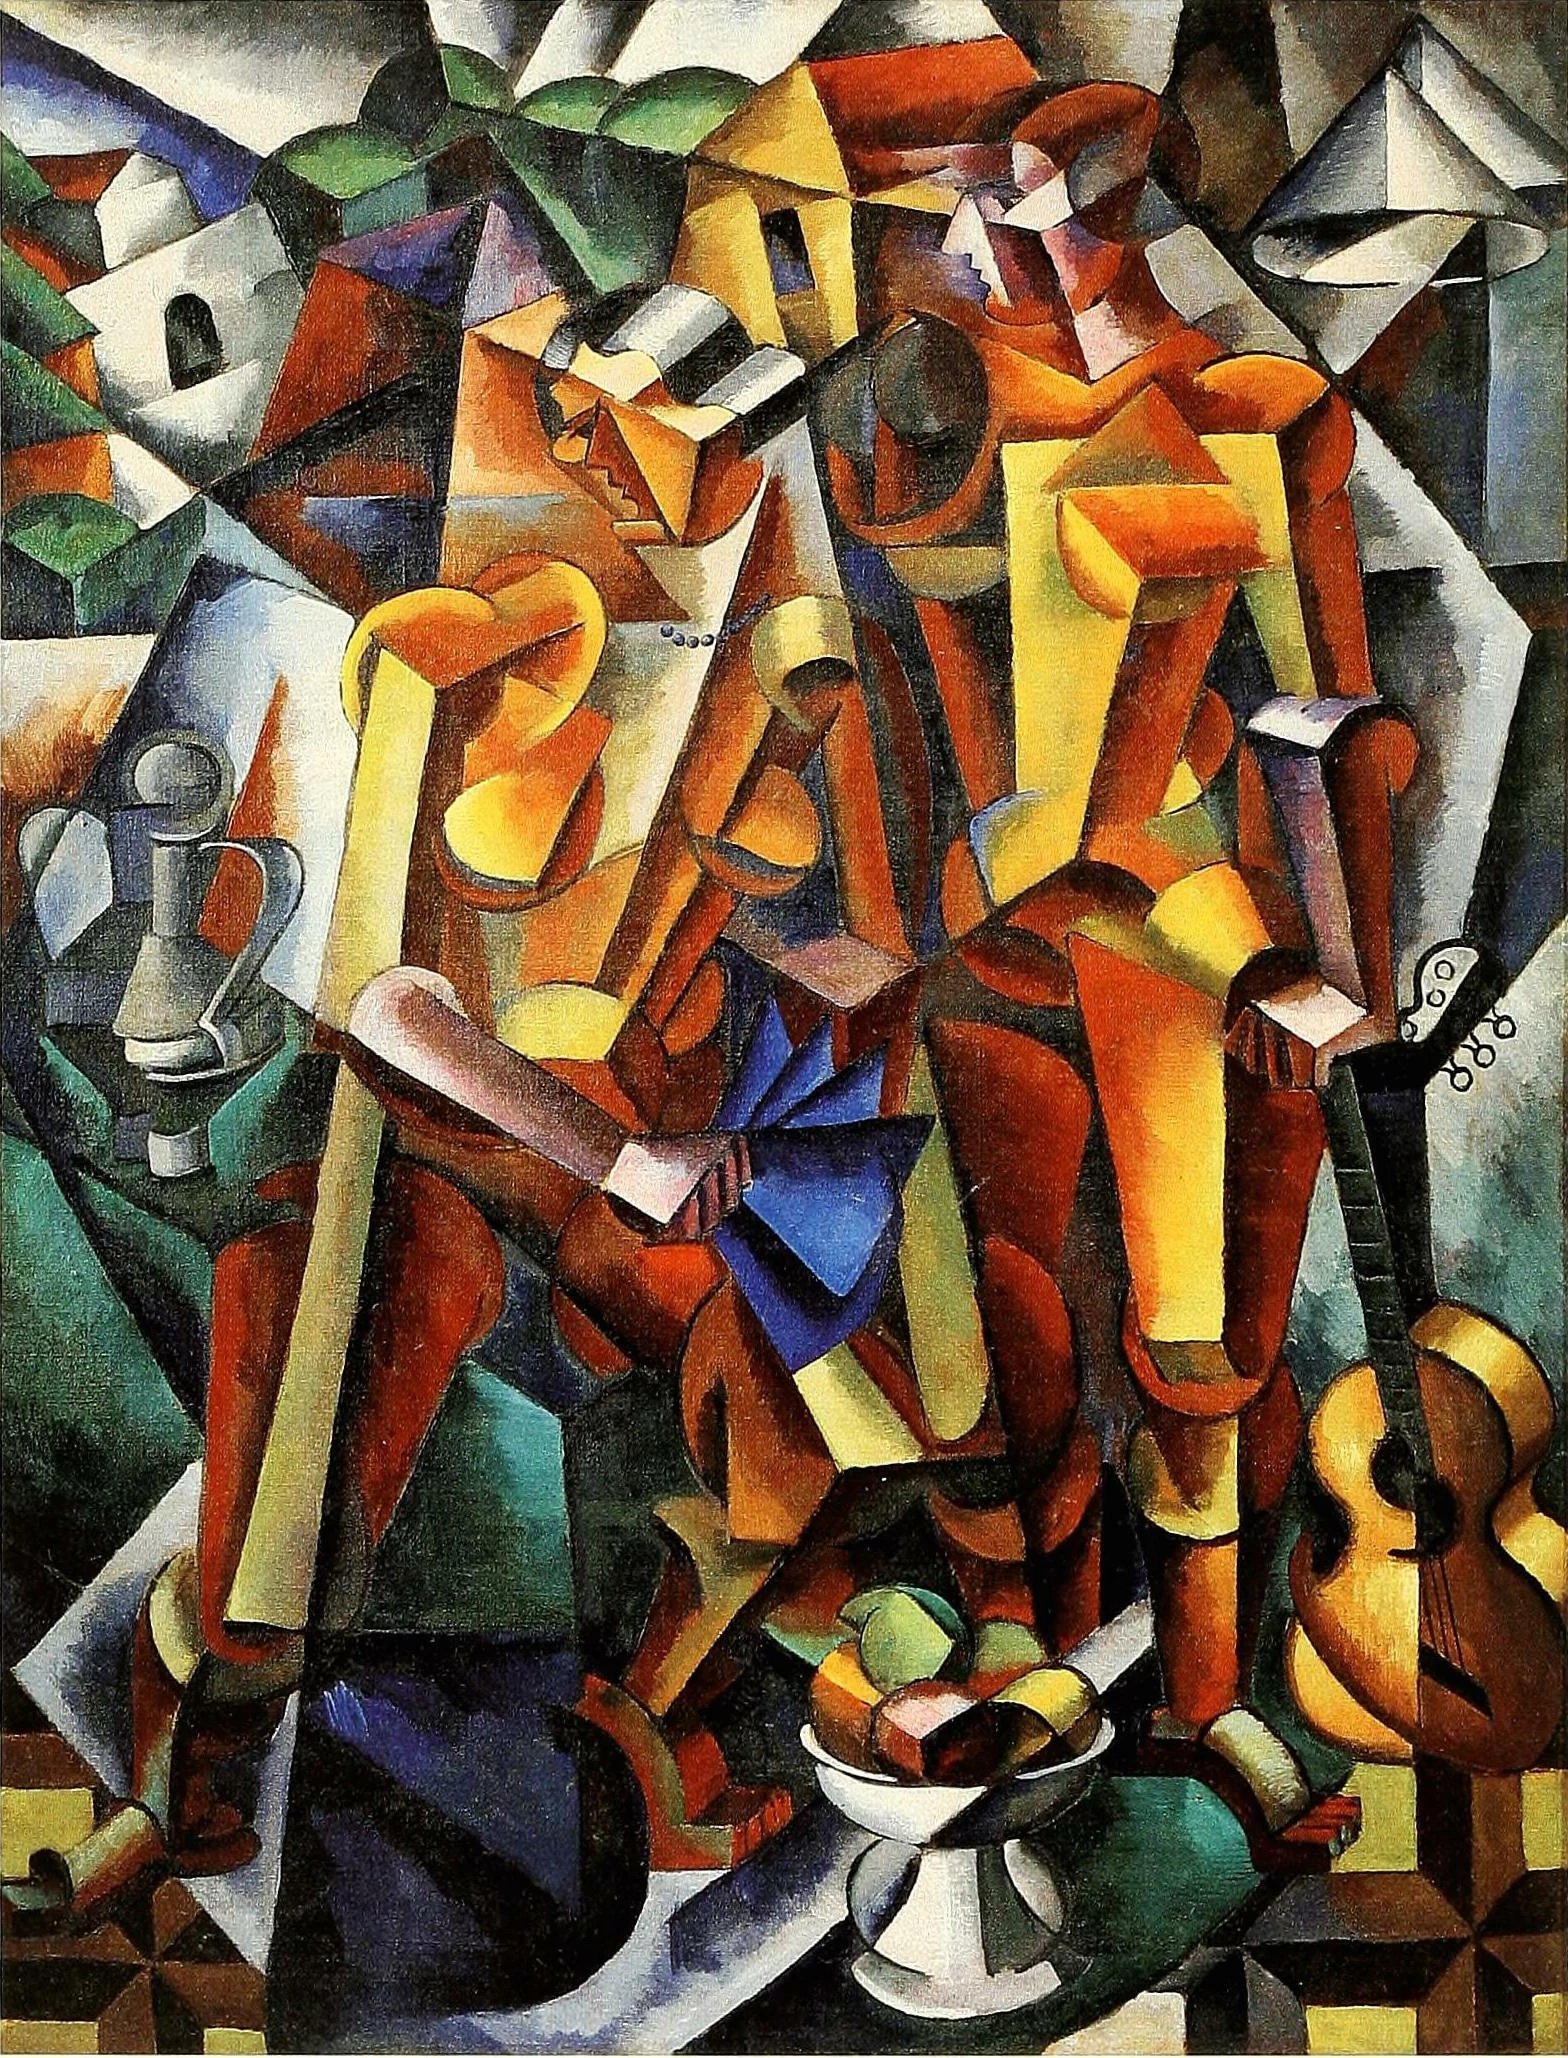 Composition with Figures, Liubov Popova